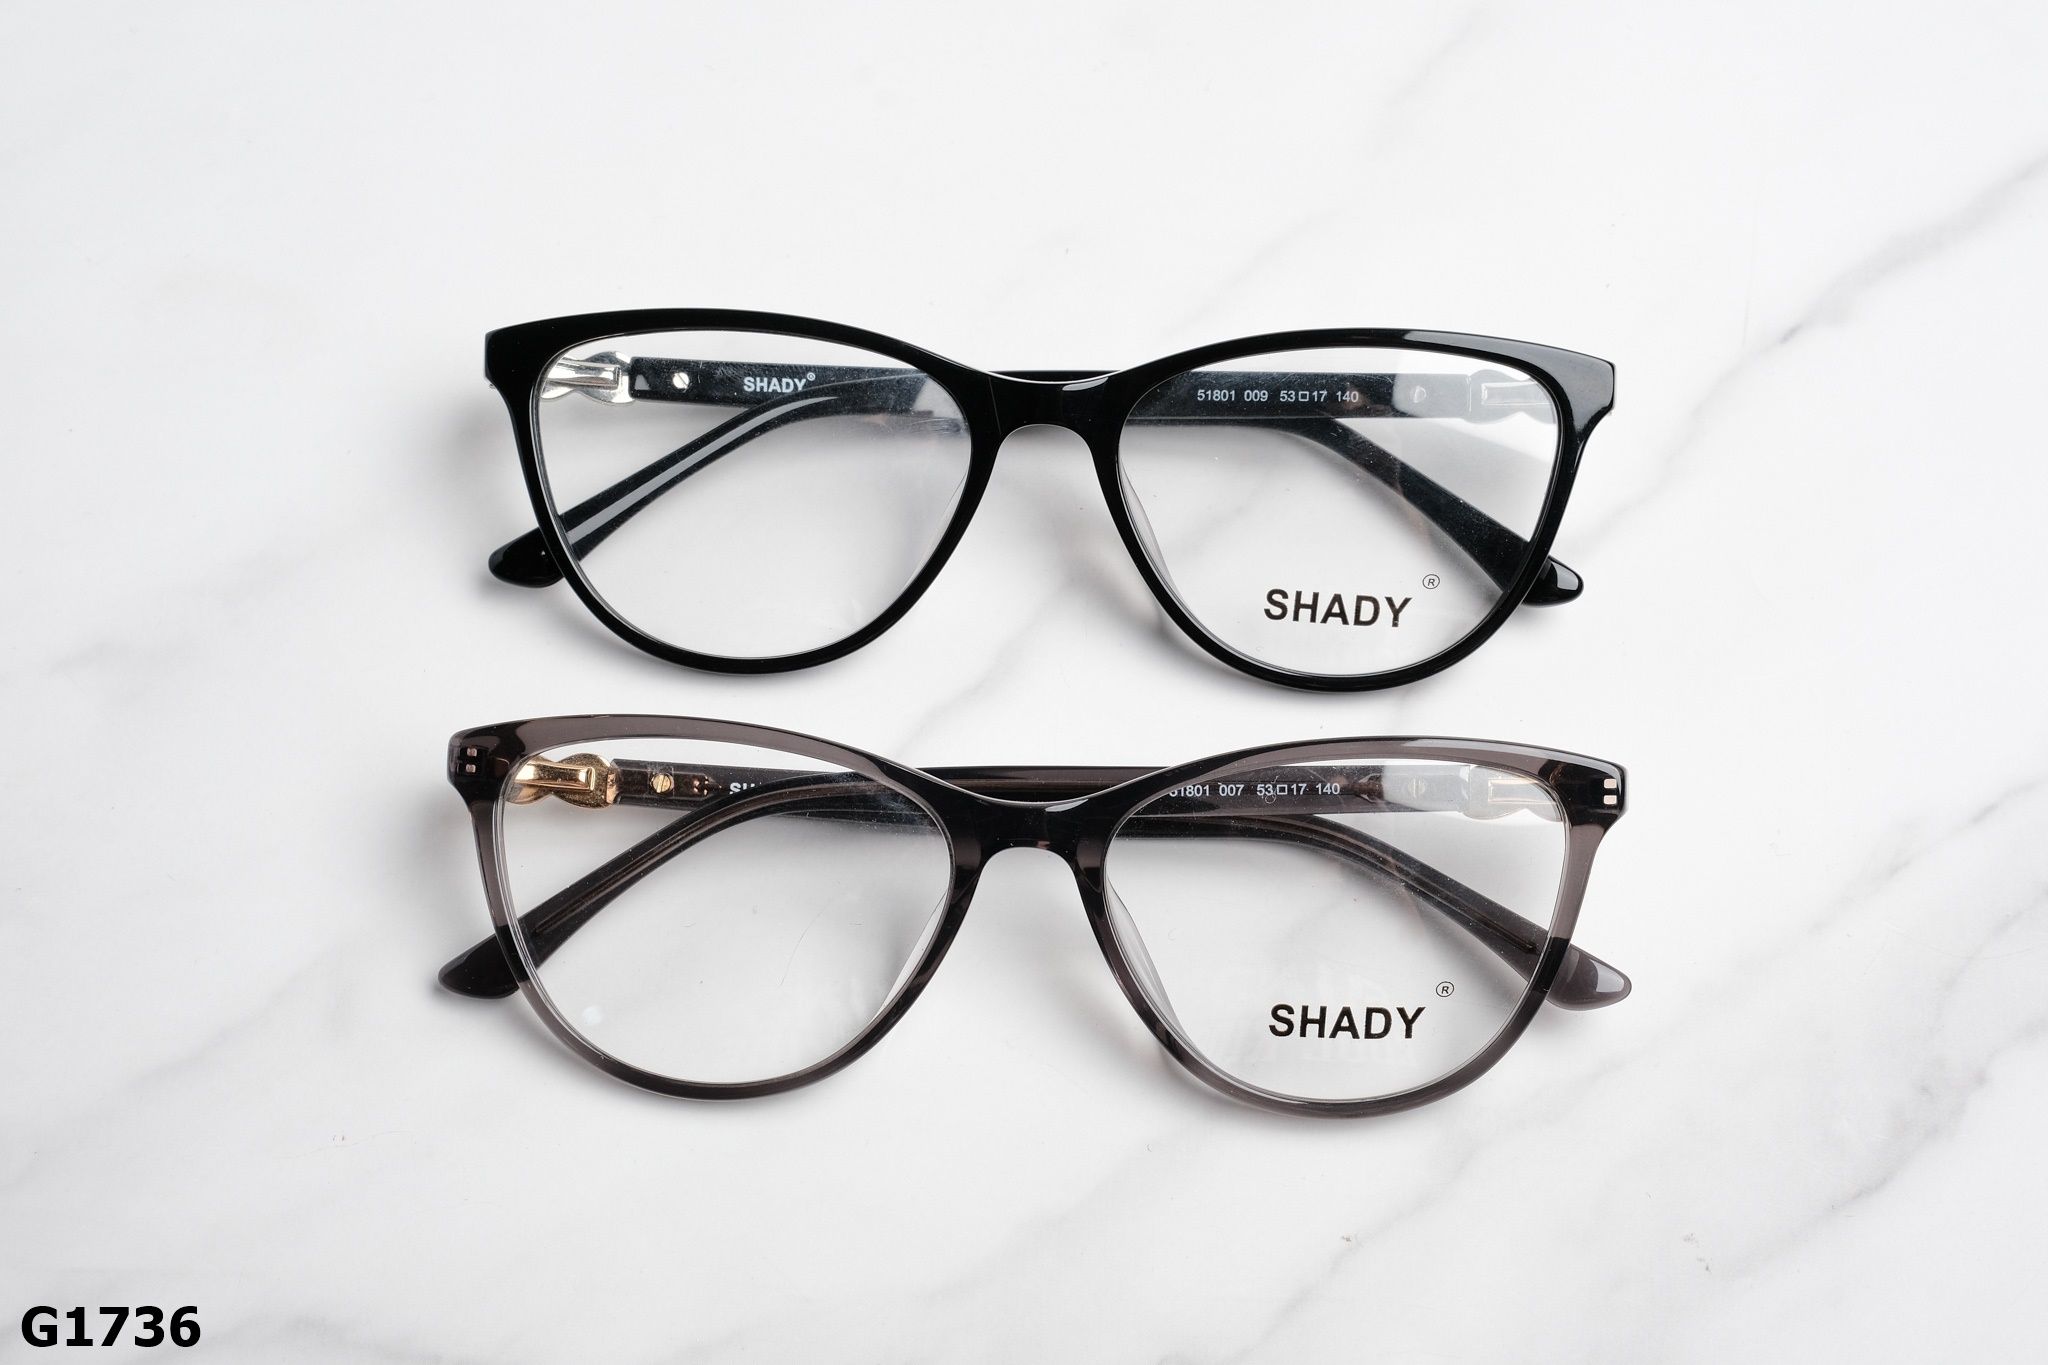  SHADY Eyewear - Glasses - G1736 